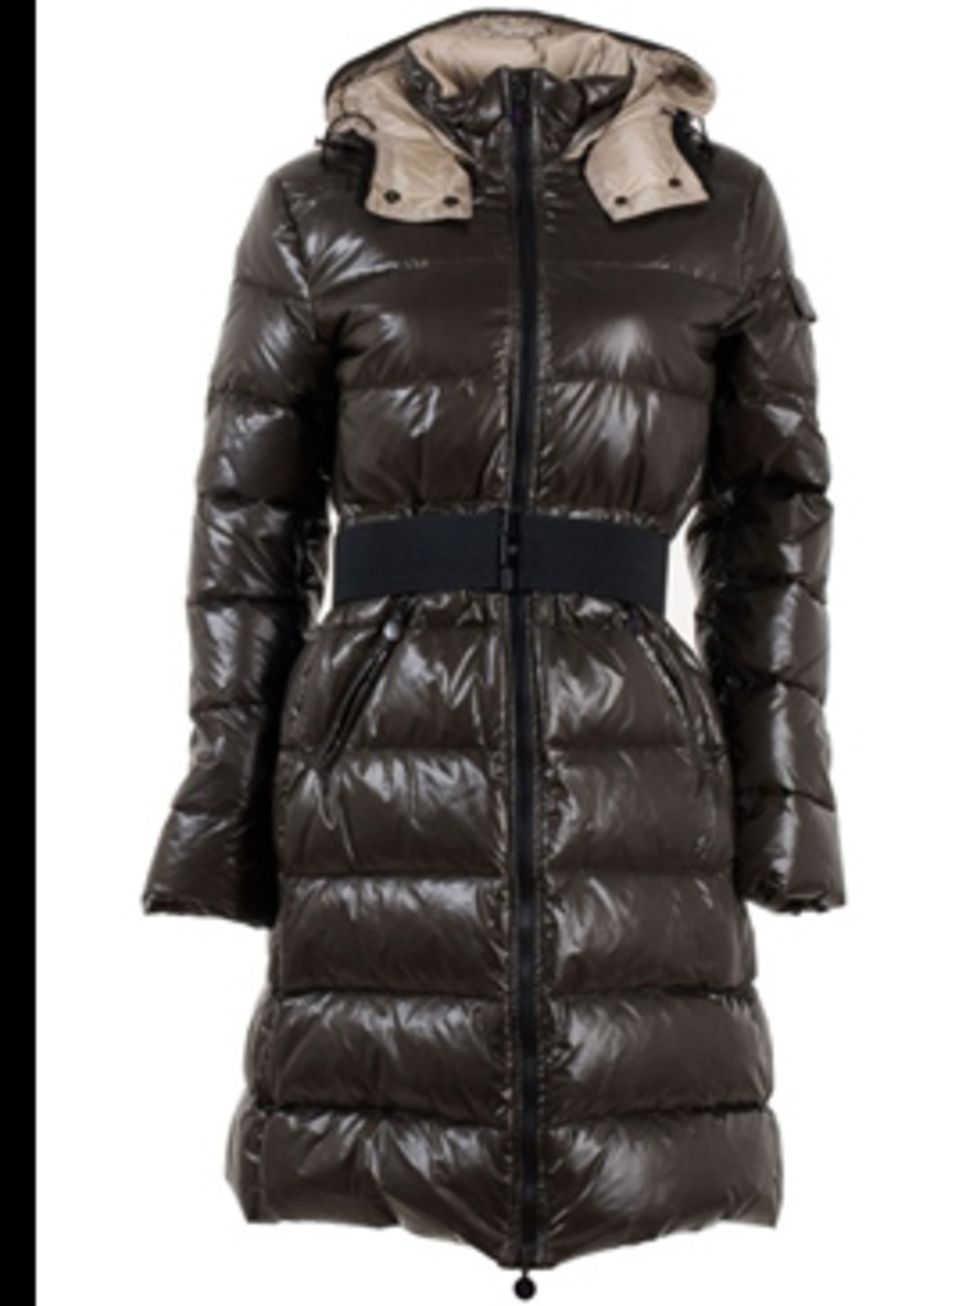 <p>Coat, £416.00 by Moncler at <a href="http://www.farfetch.com/shopping/women/search/item10009777.aspx">Farfetch</a></p>